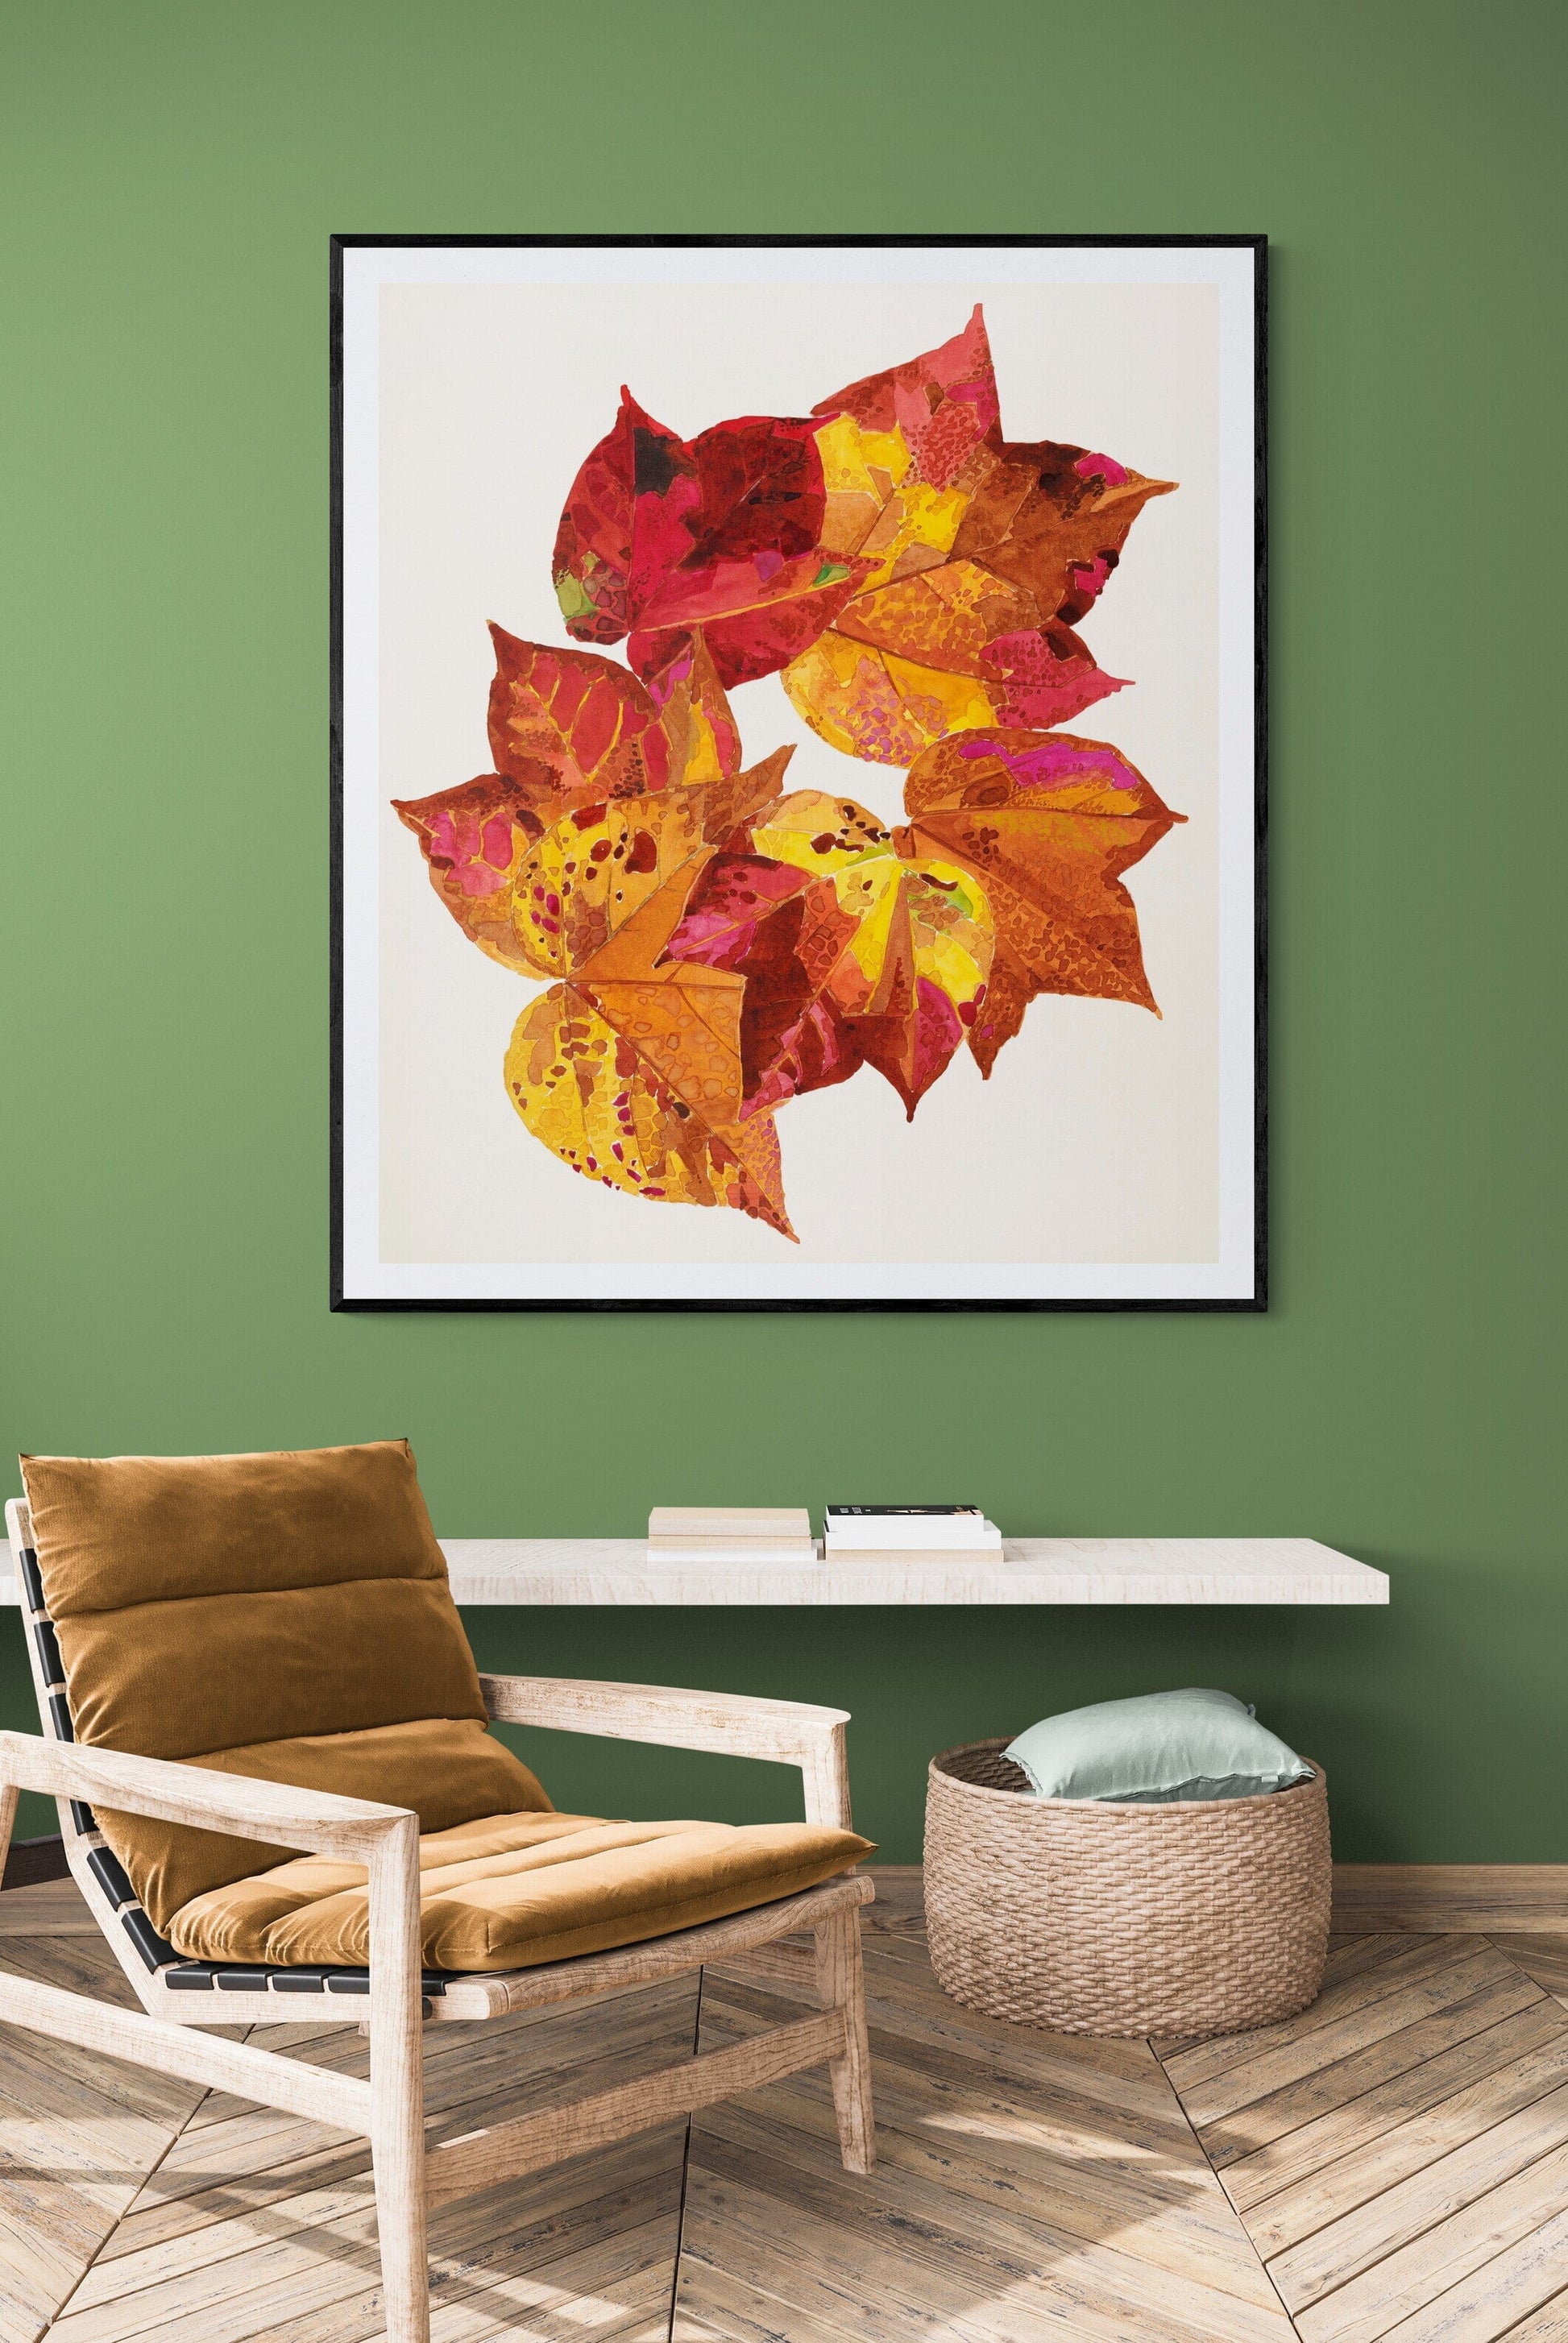 Autumn Leaves (1940s) | Lounge wall art prints | Reijer Stolk Posters, Prints, & Visual Artwork The Trumpet Shop   